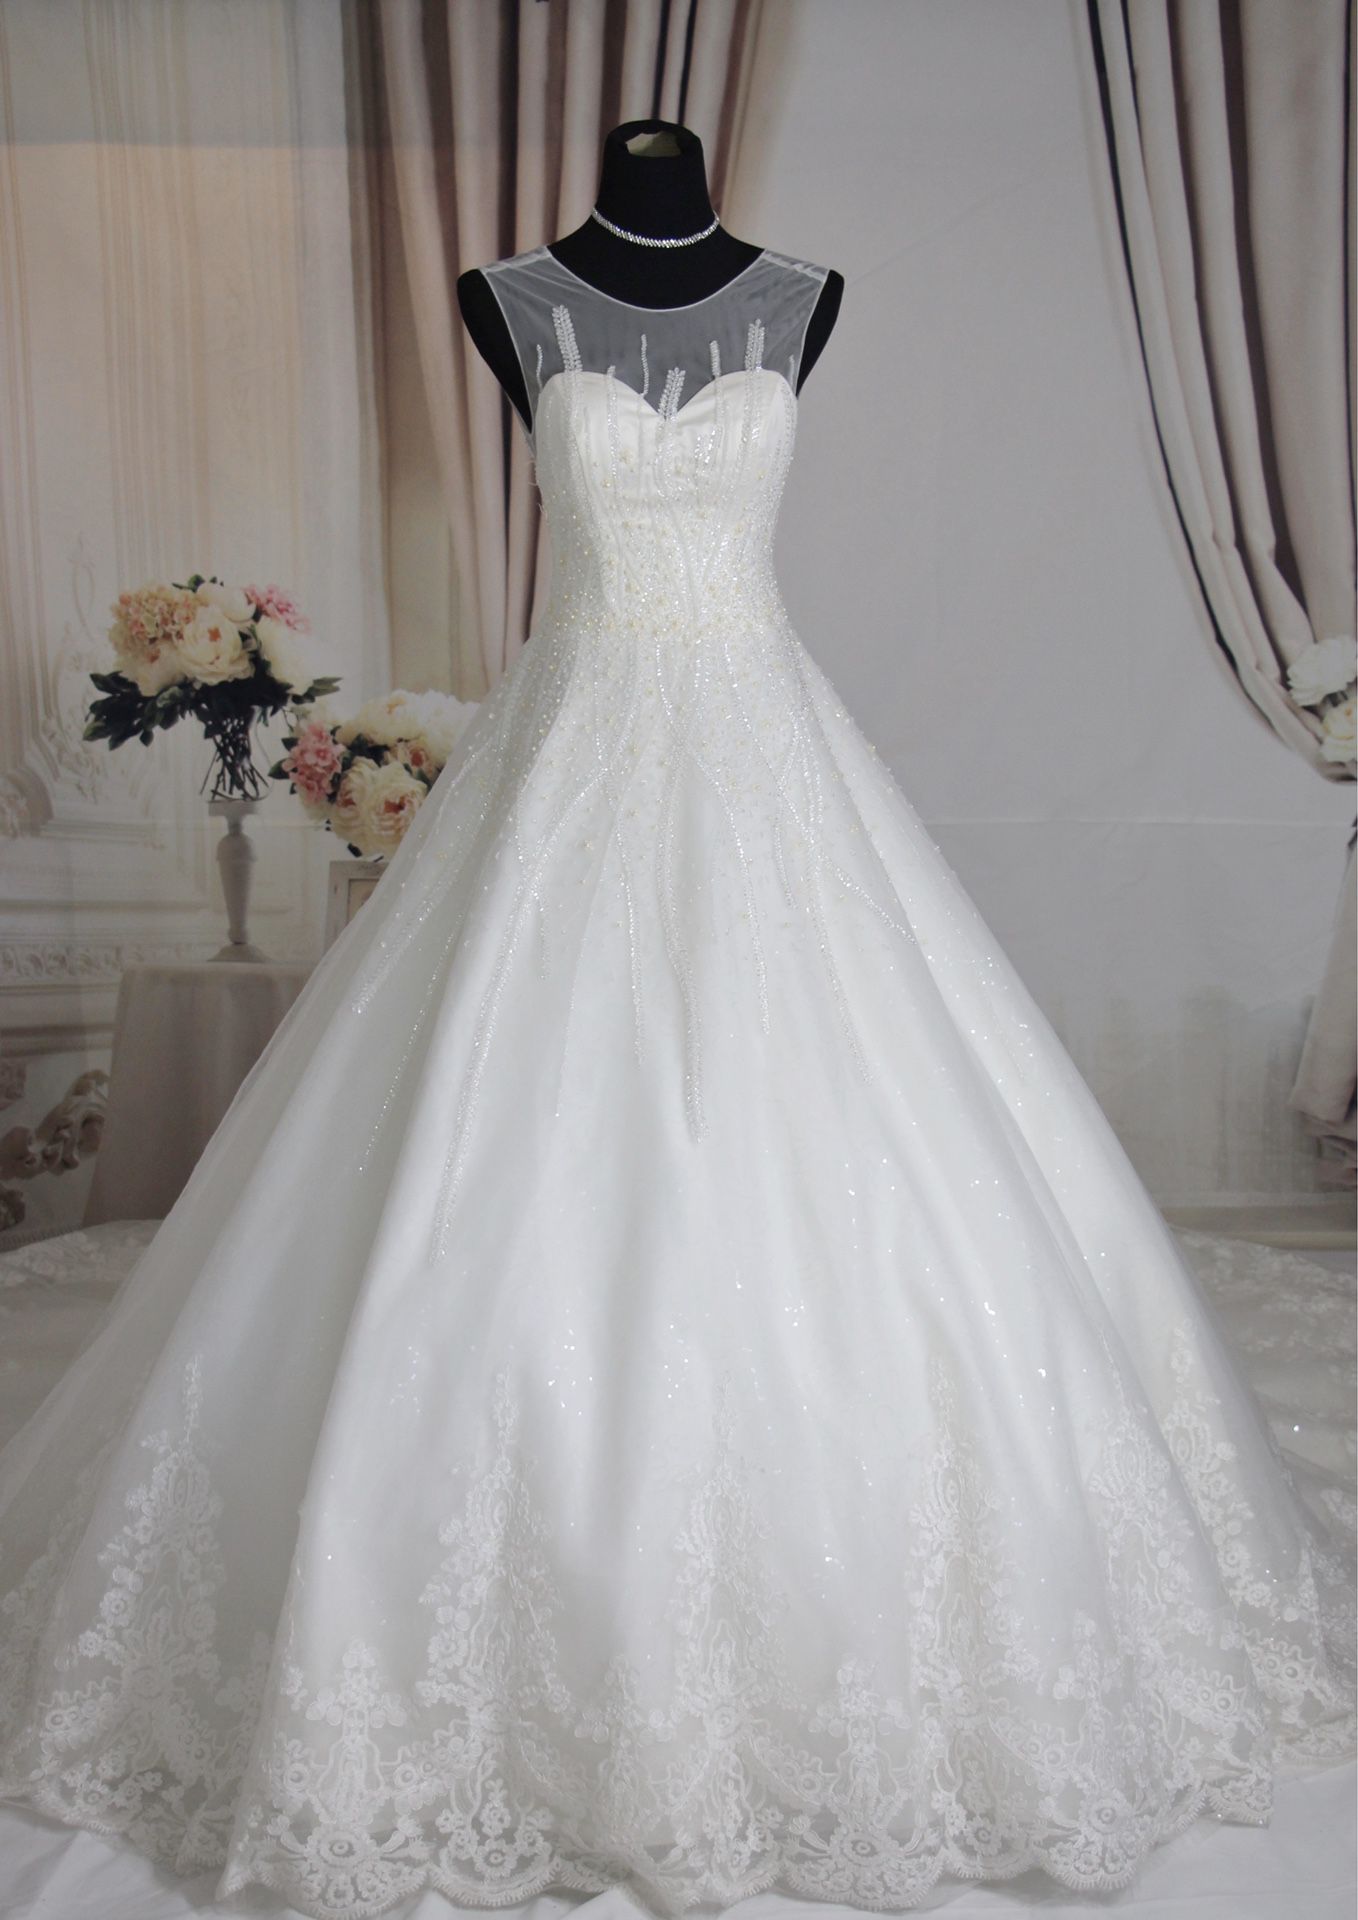 Luxury beading ballgown wedding dress, size 2-4